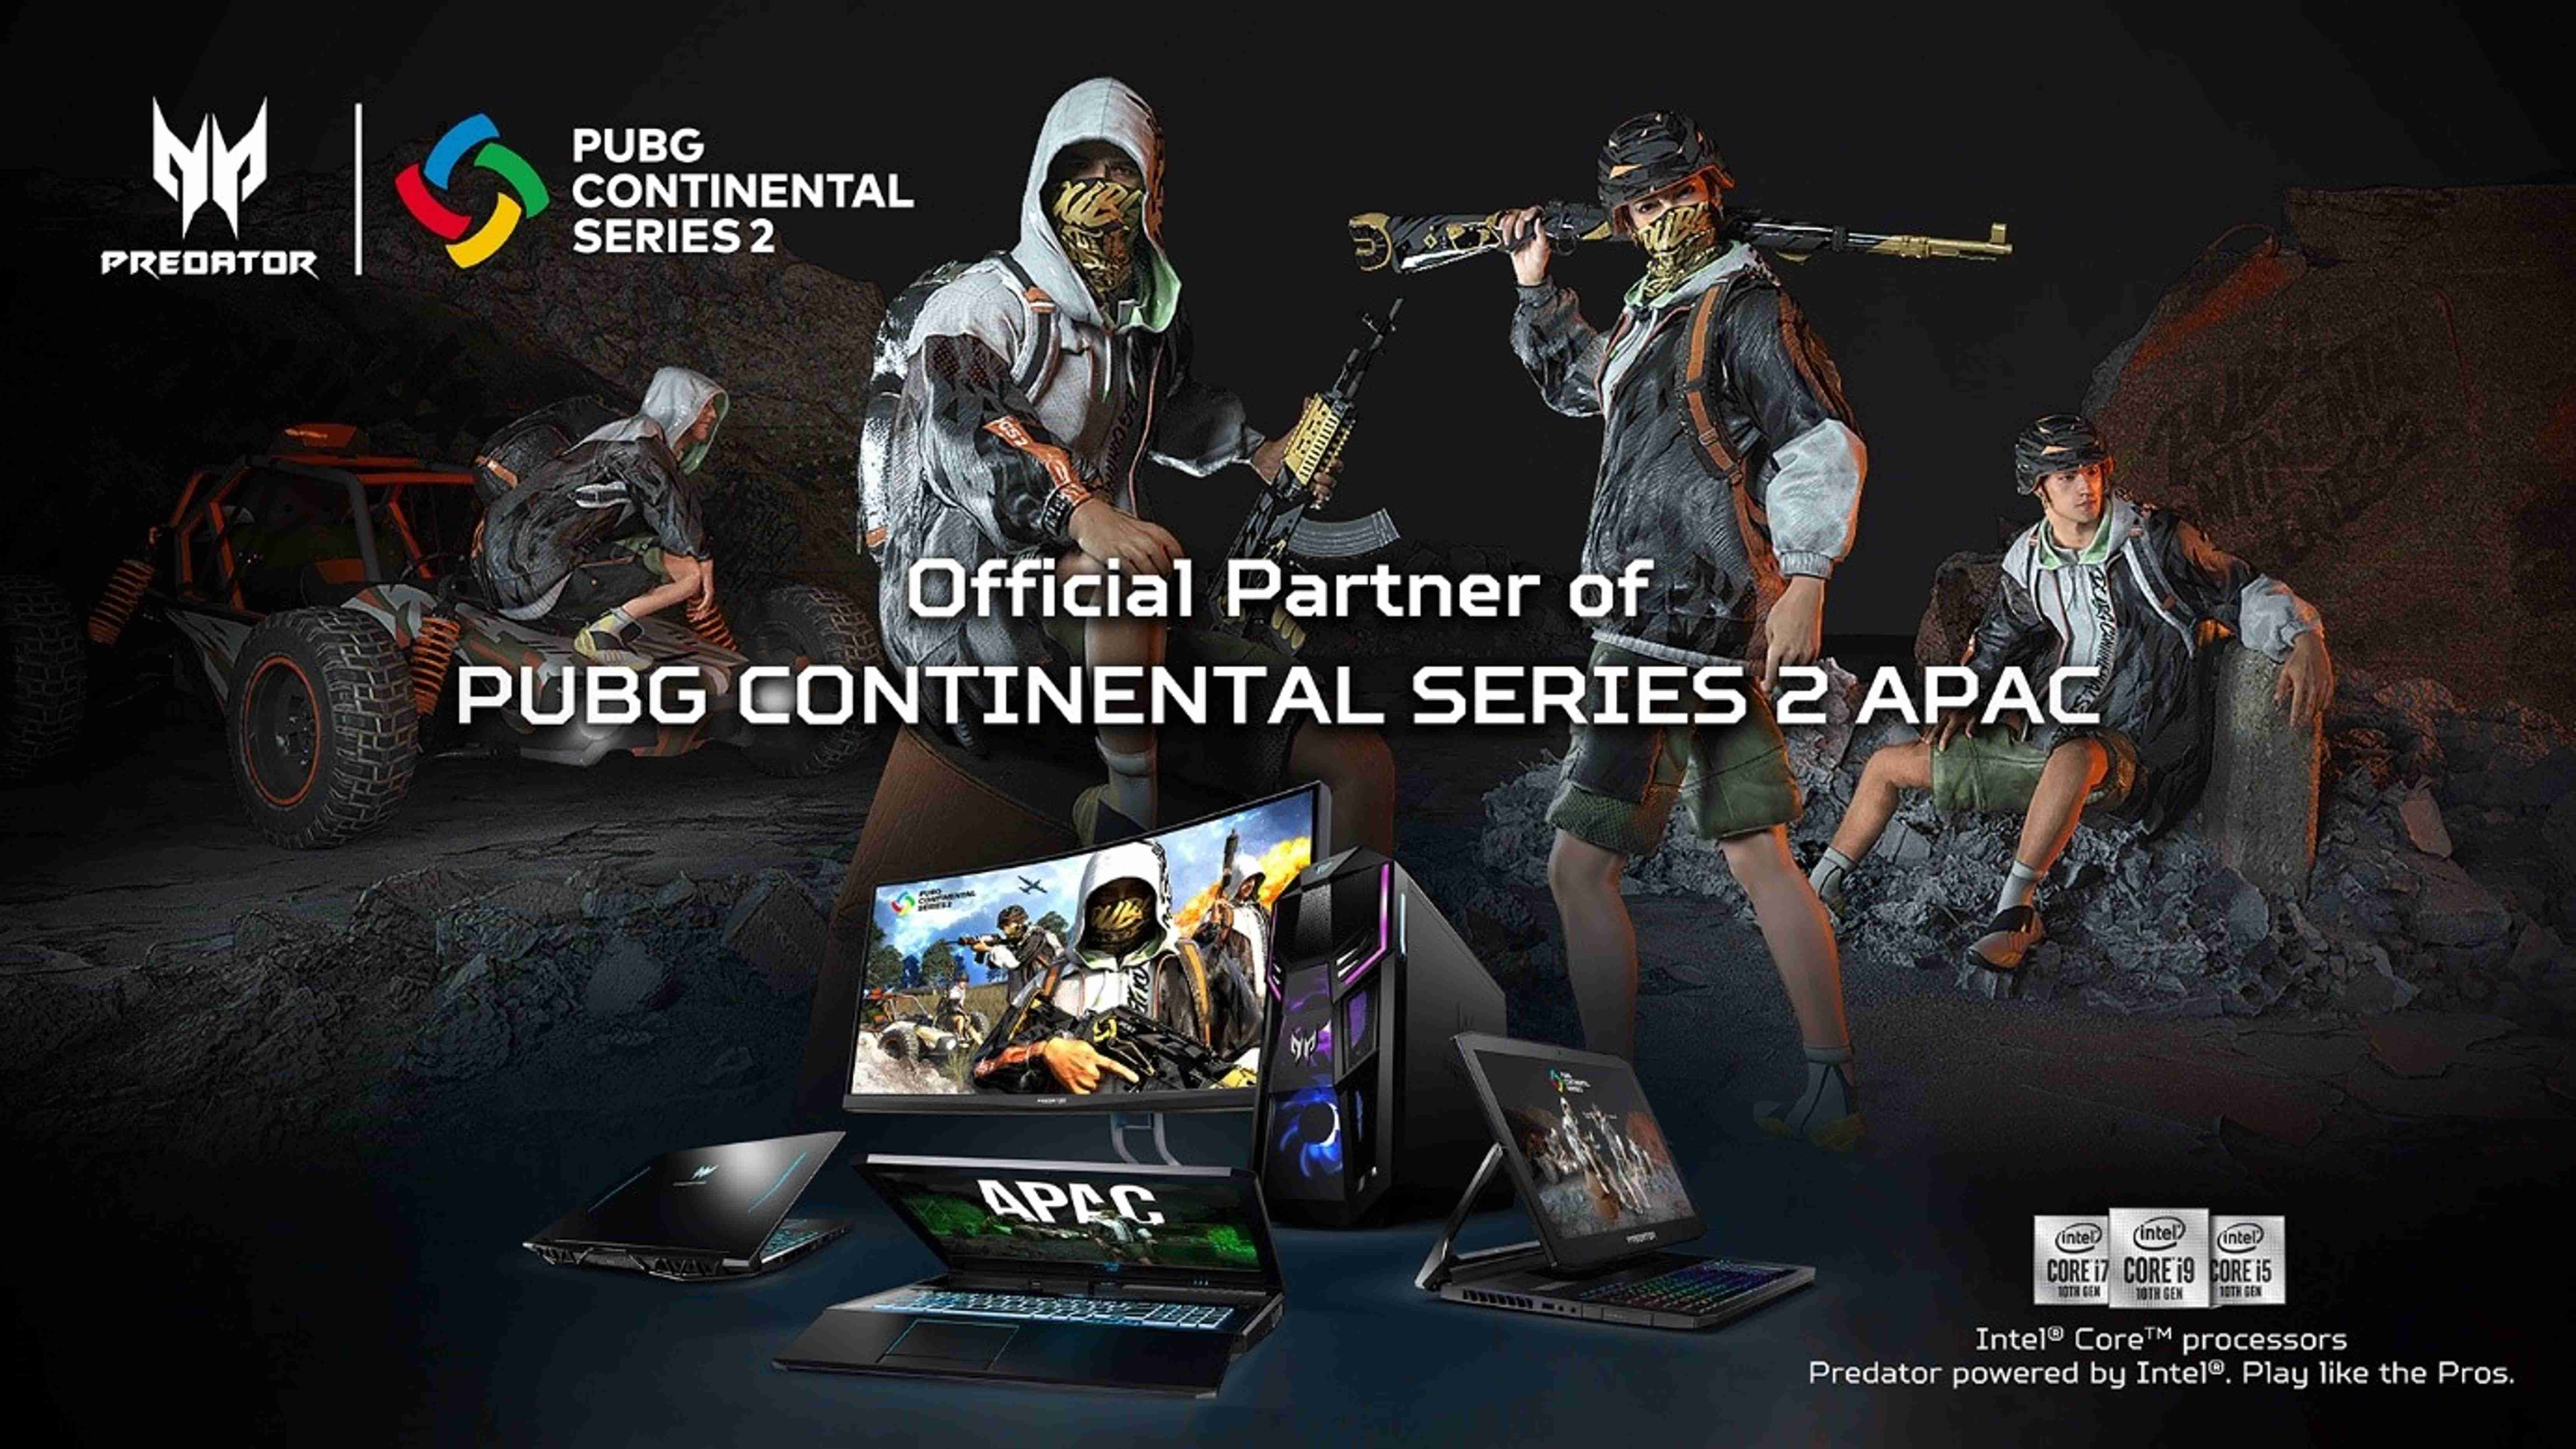 acer named as official sponsor for pubg continental series 2 apac 1 เอเซอร์ประกาศเป็นผู้สนับสนุนอย่างเป็นทางการในศึก PUBG Continental Series 2 APAC